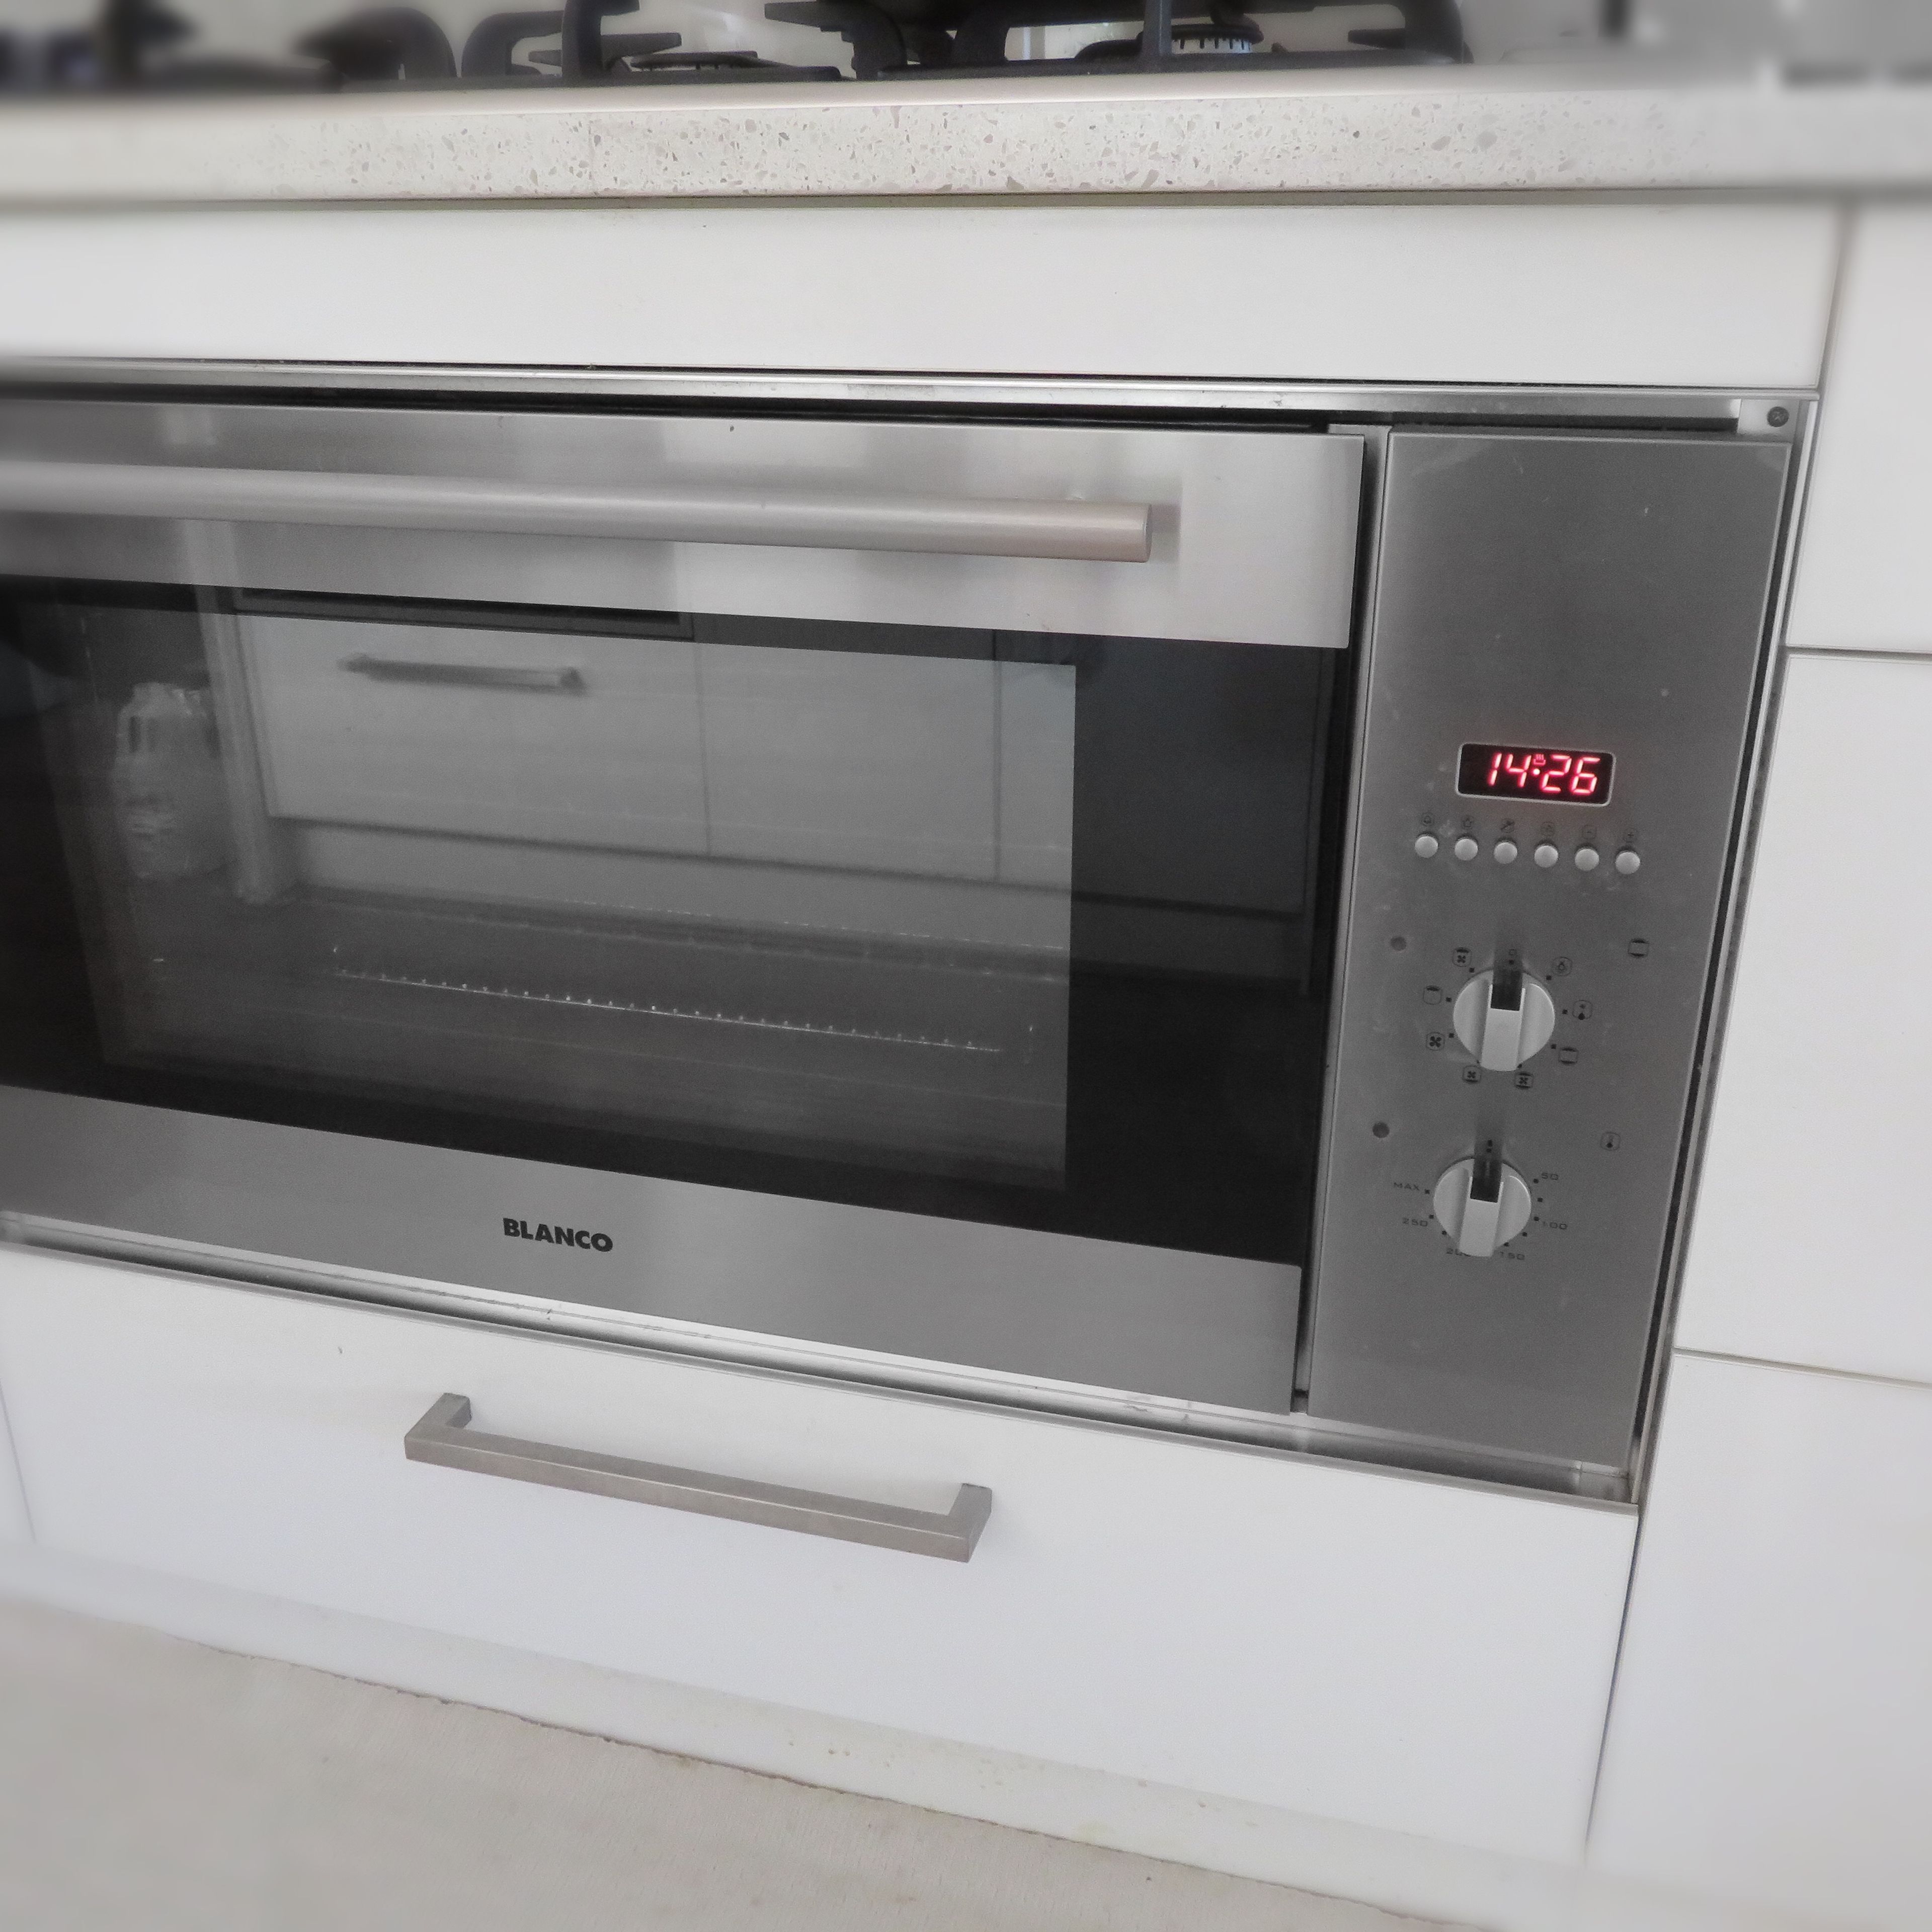 Preheat fan forced oven to 160°C